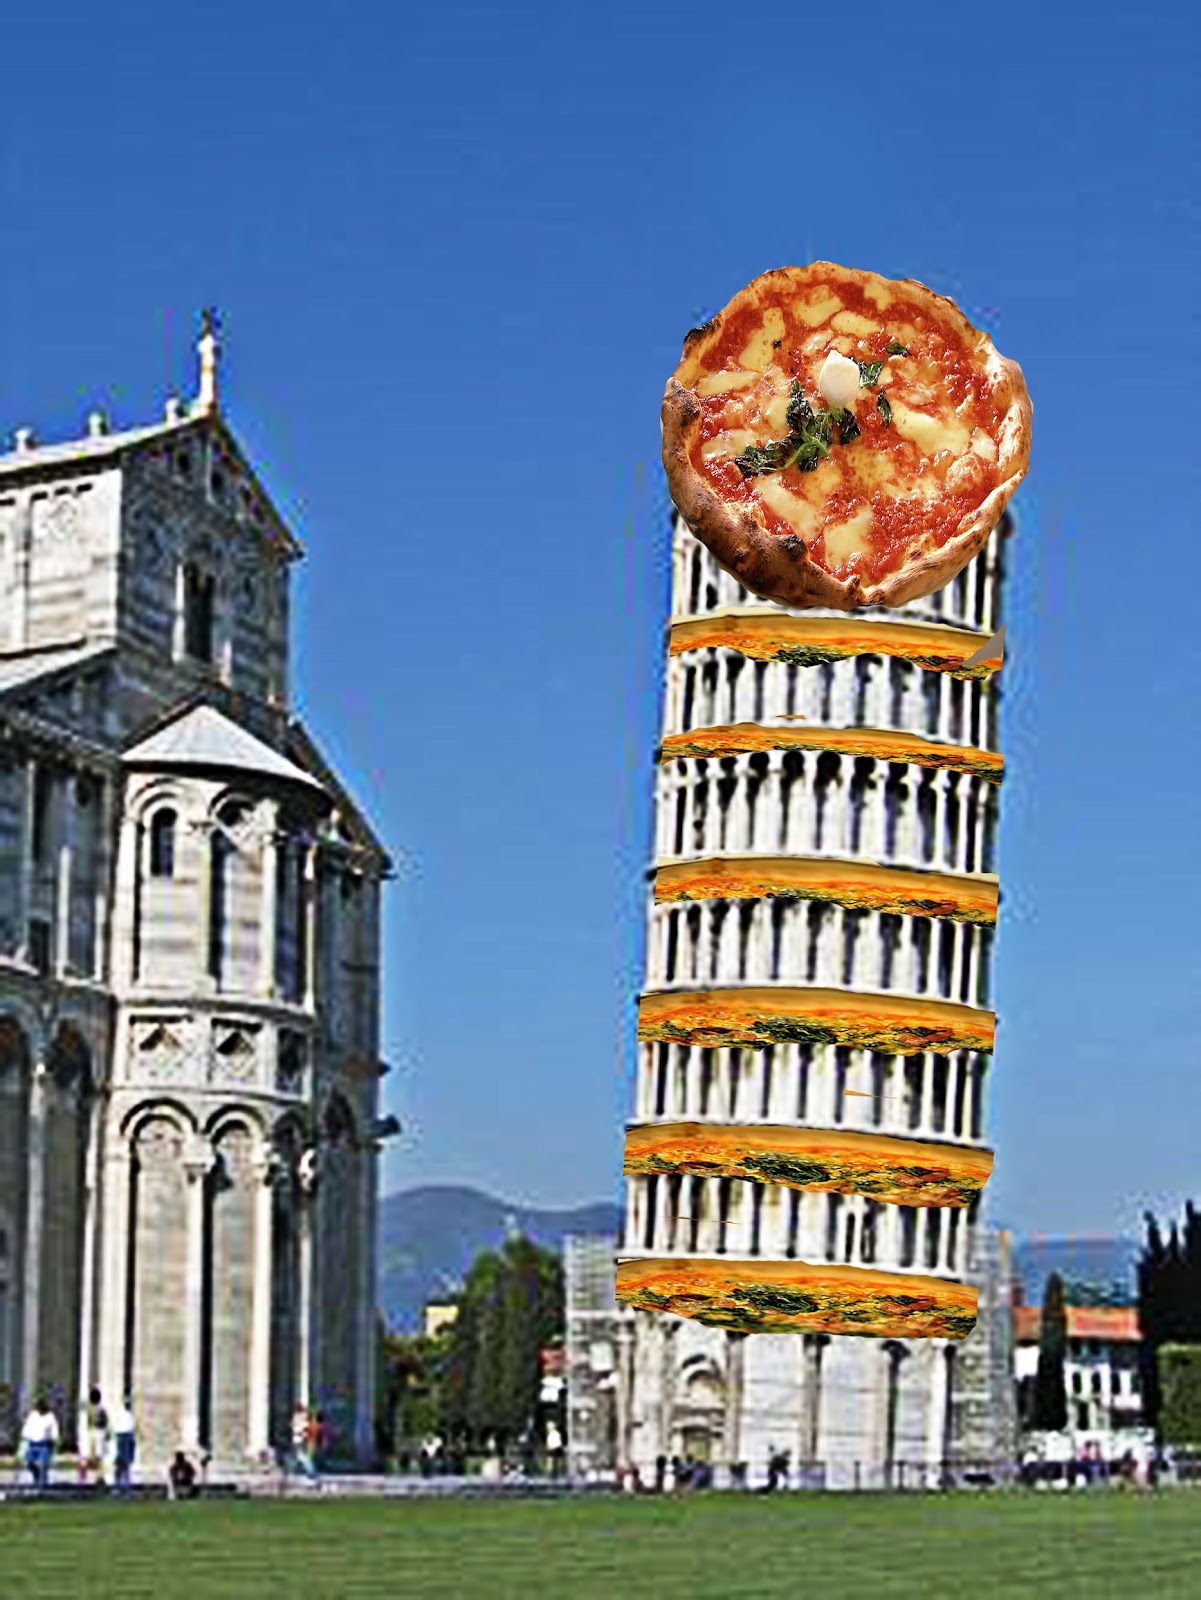 Пицца тауэр на телефон. Пизза Тауэр. Джон колонна пицца Тауэр. Пизза достопримечательности. Пизанская башня и пицца.